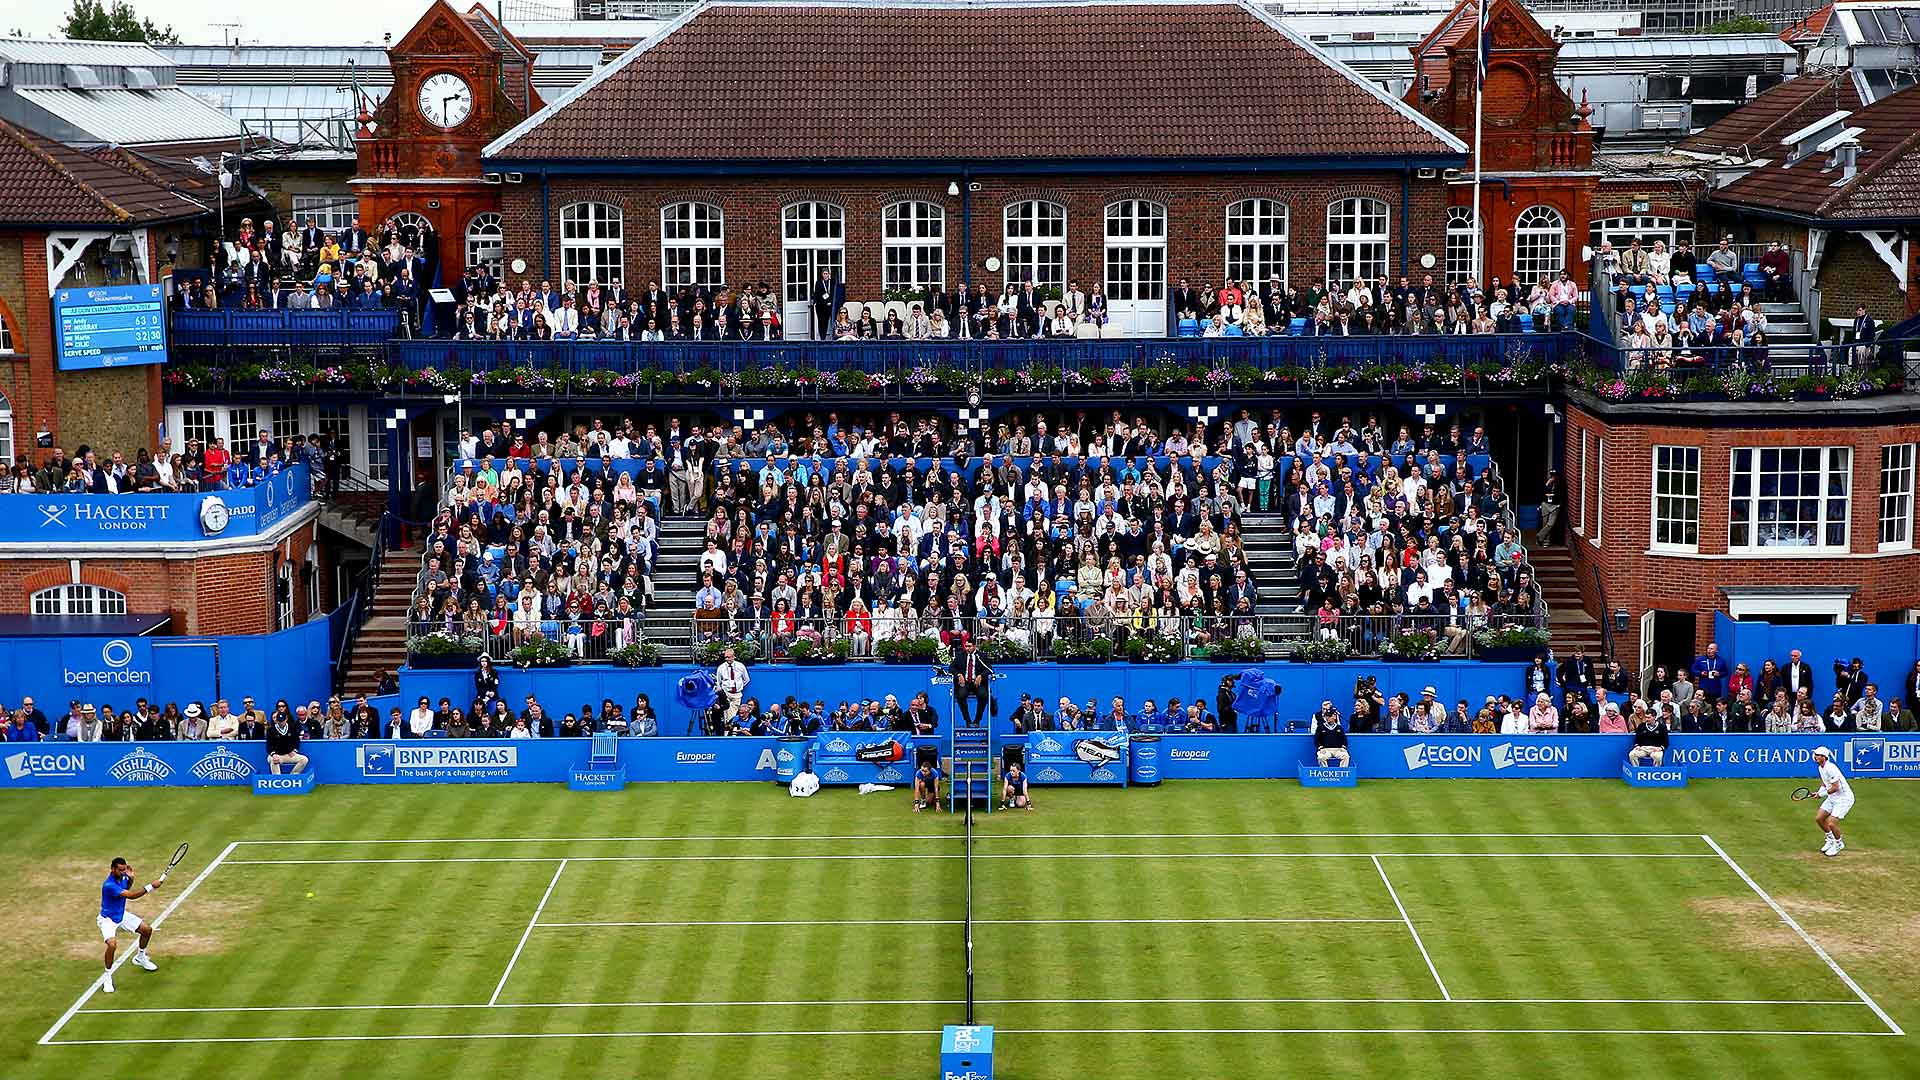 The Queen's Club Tennis Court